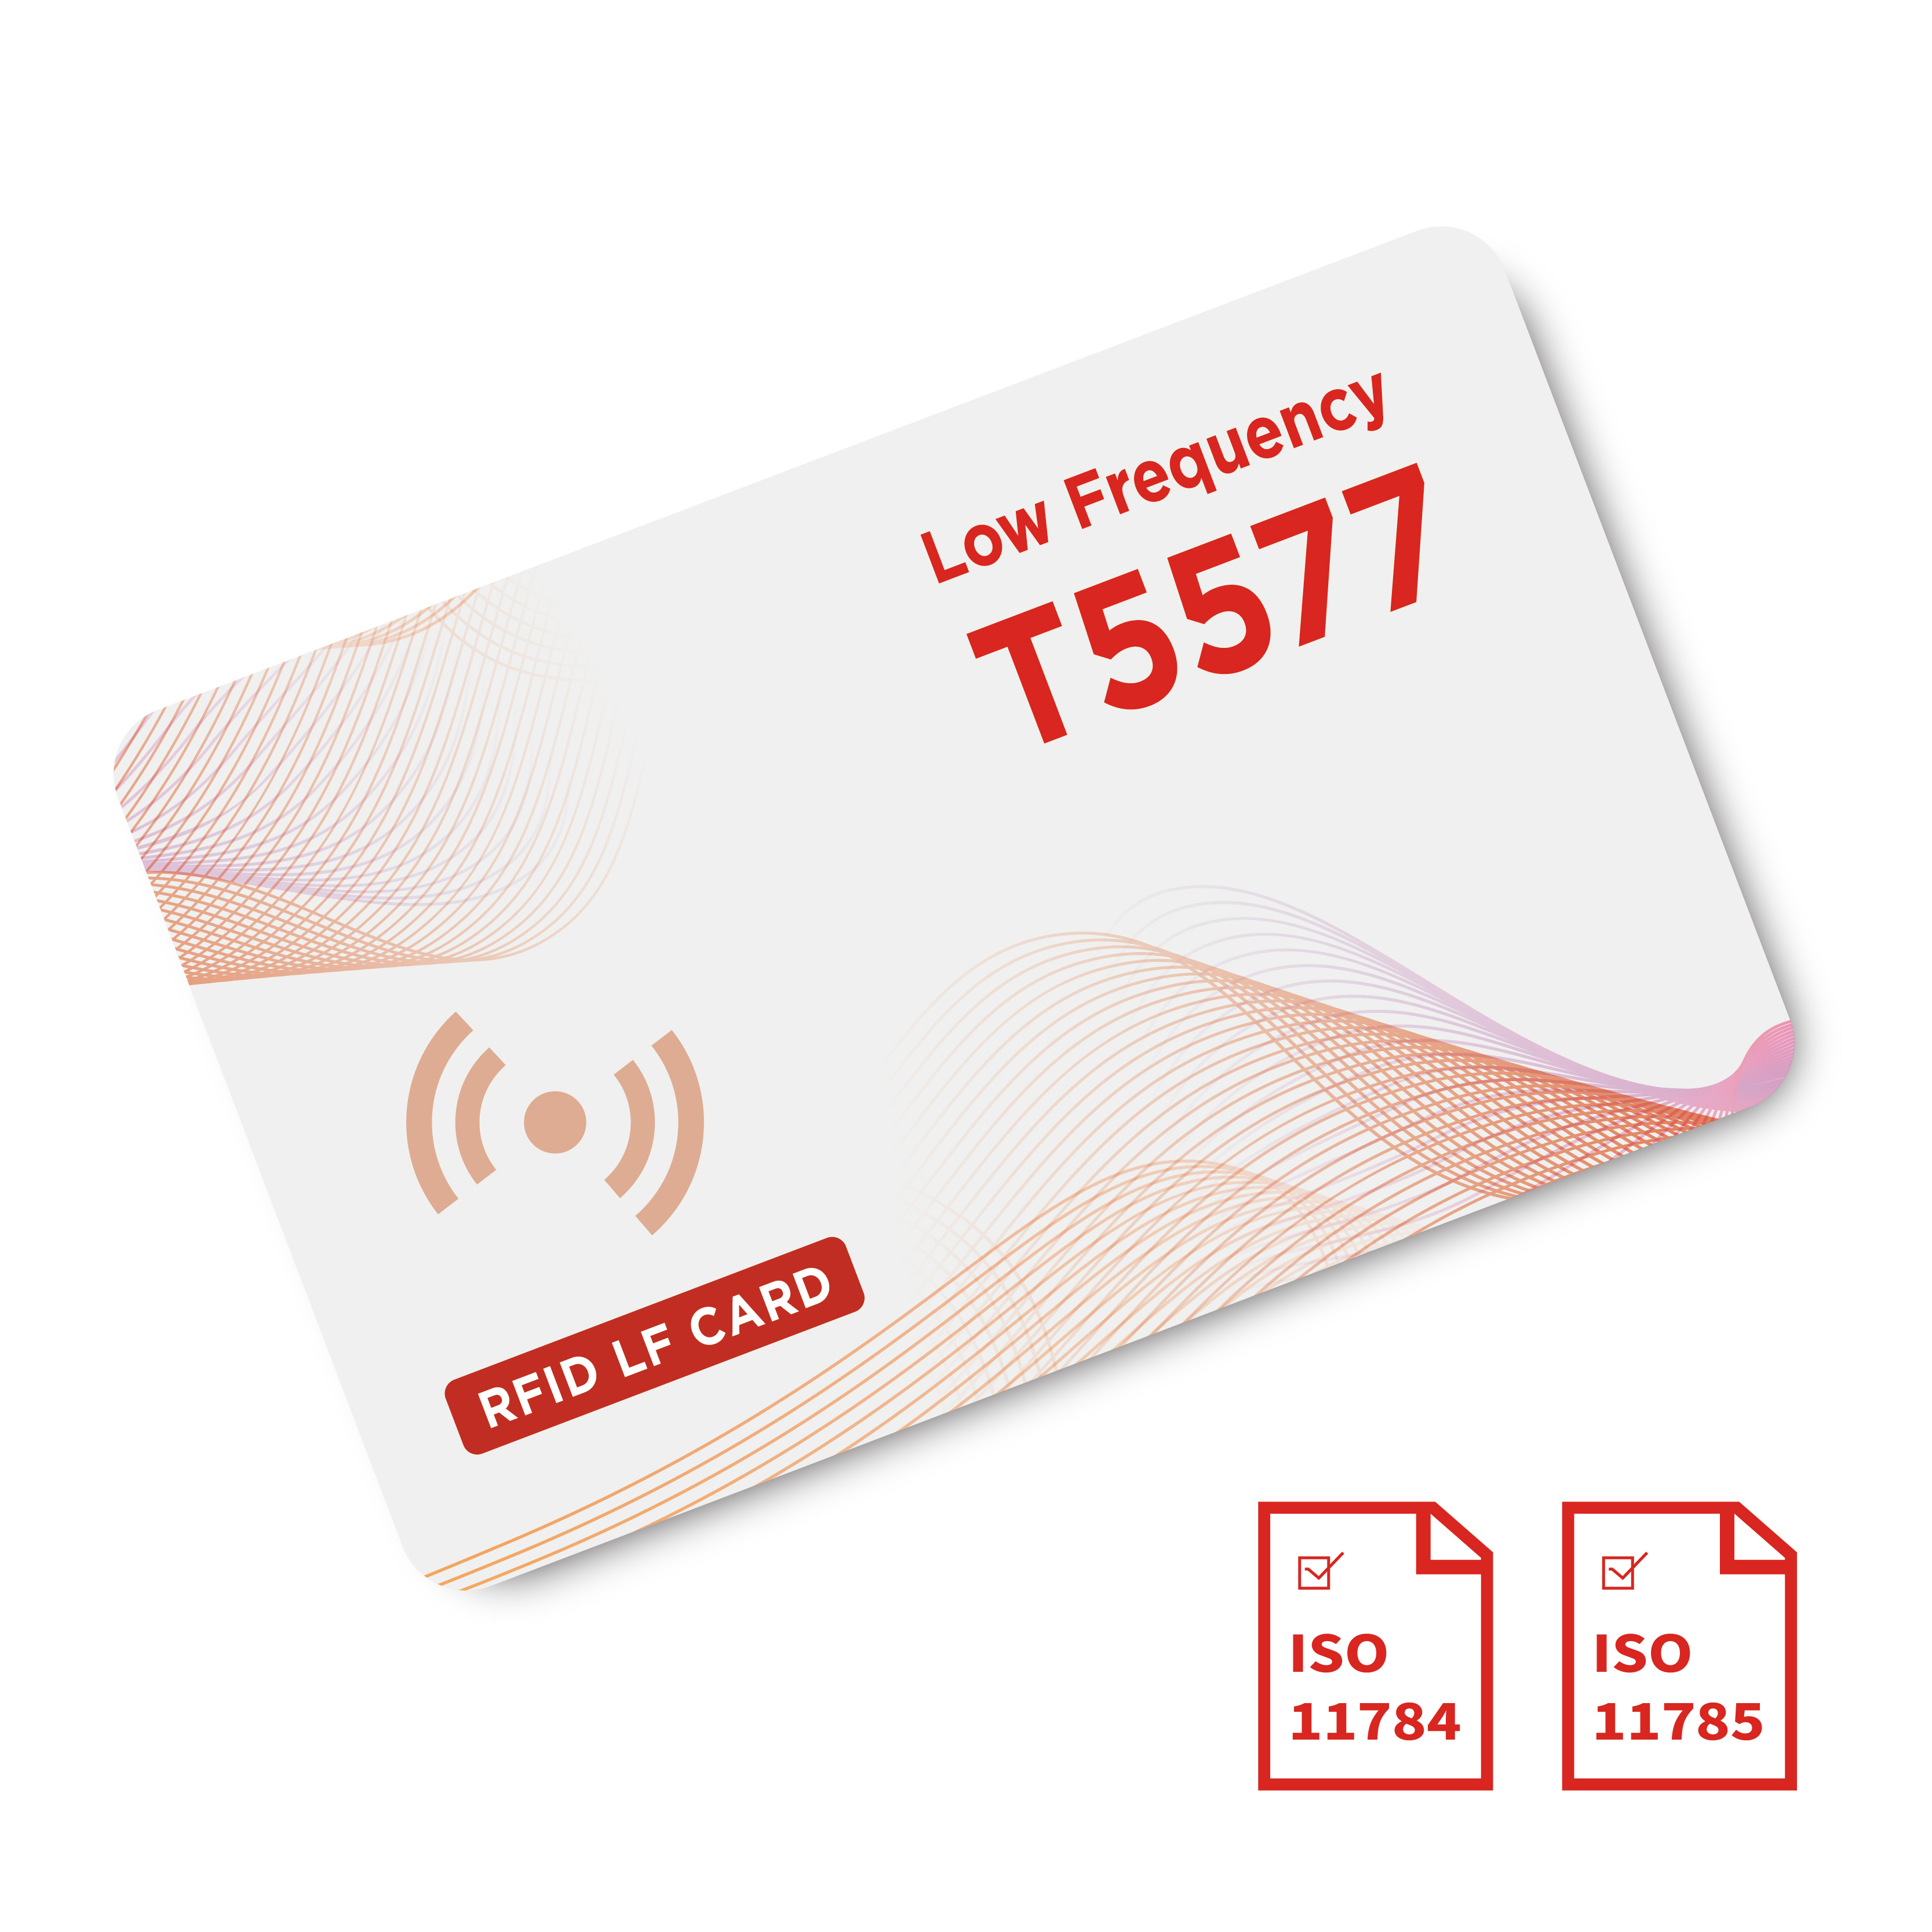 定制 T5577 低频 RFID 卡